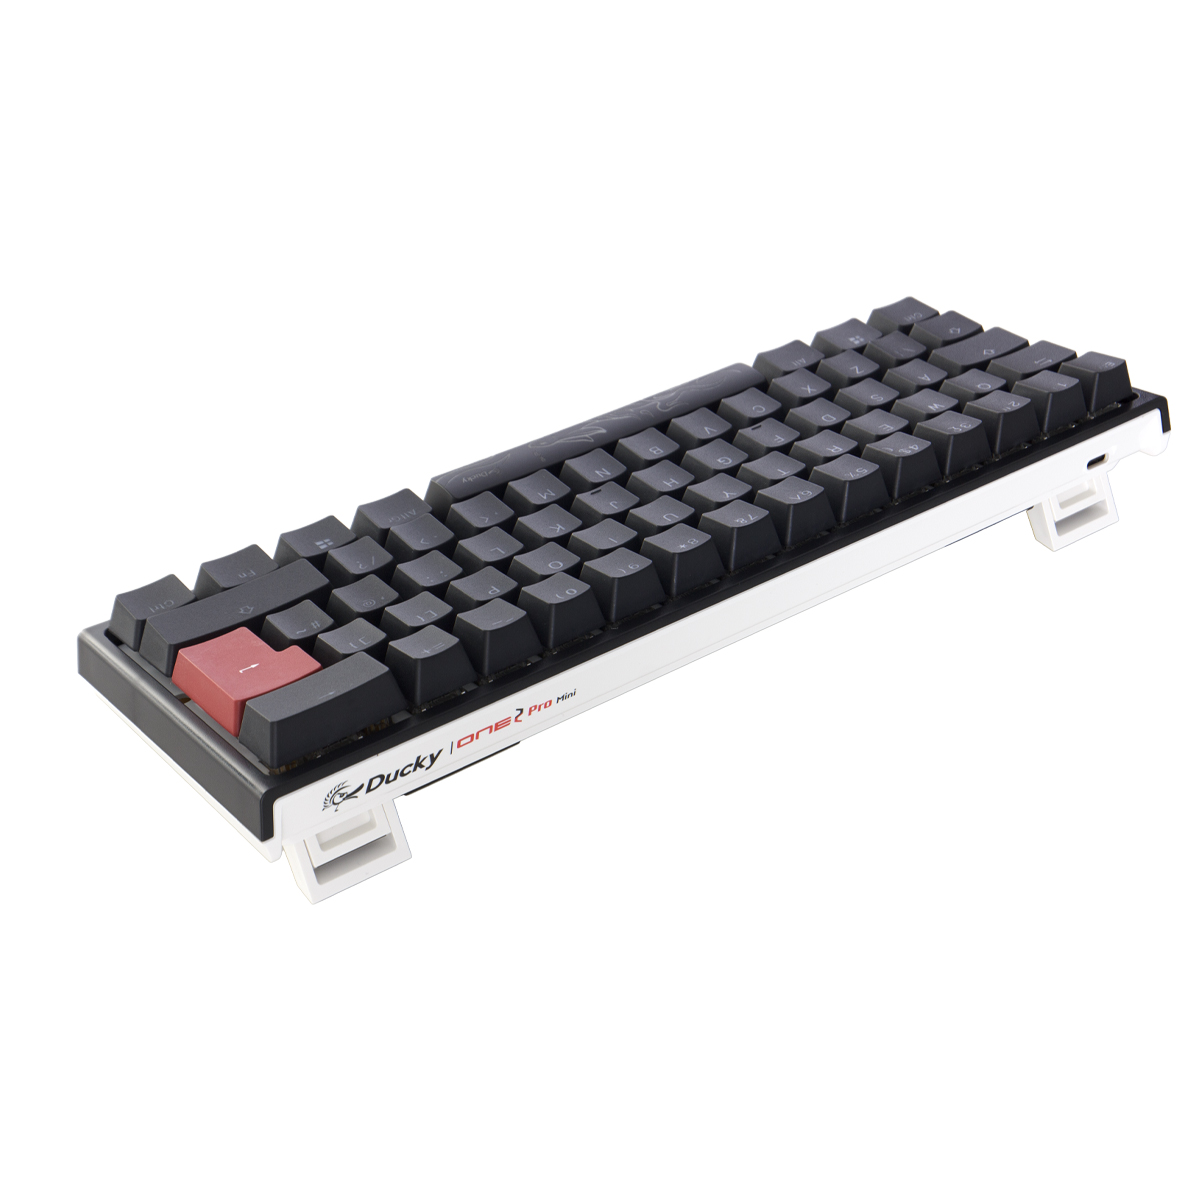 Ducky - Ducky One 2 Pro Mini 60% Mechanical Gaming Keyboard Black MX Cherry Blue Switch - UK Layout